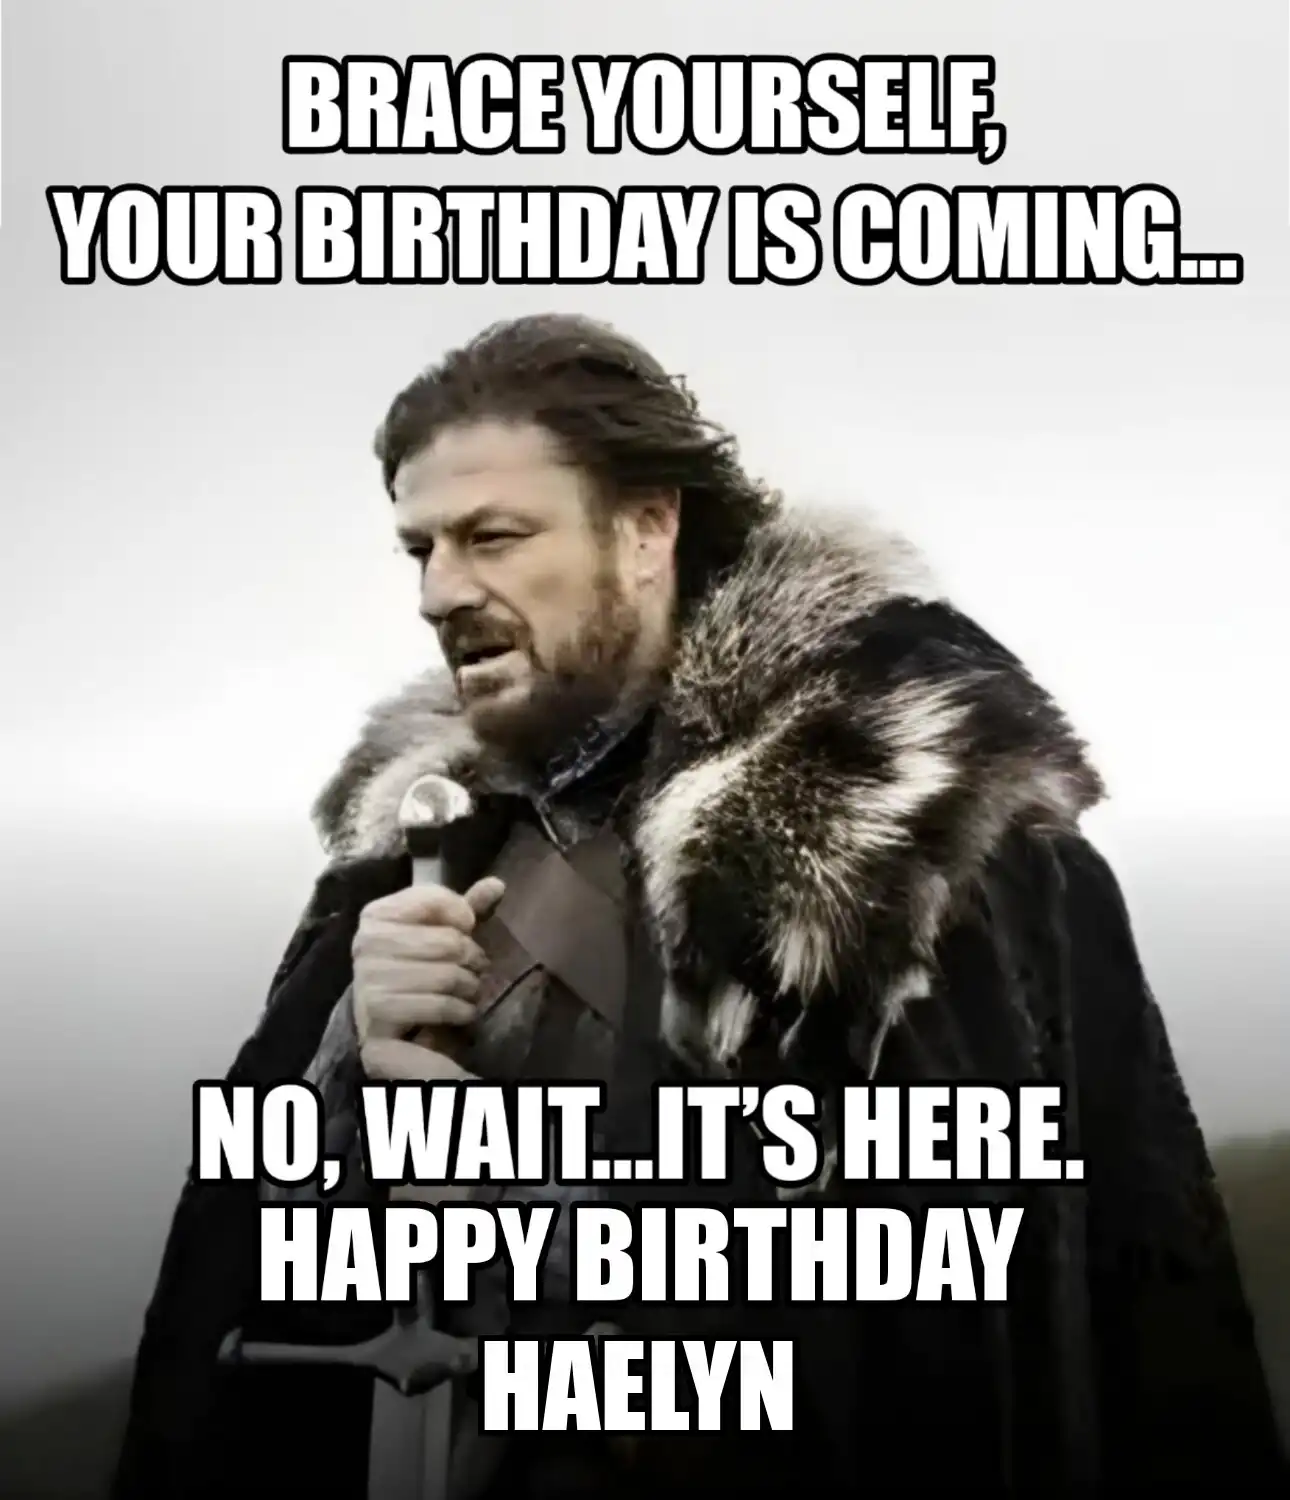 Happy Birthday Haelyn Brace Yourself Your Birthday Is Coming Meme